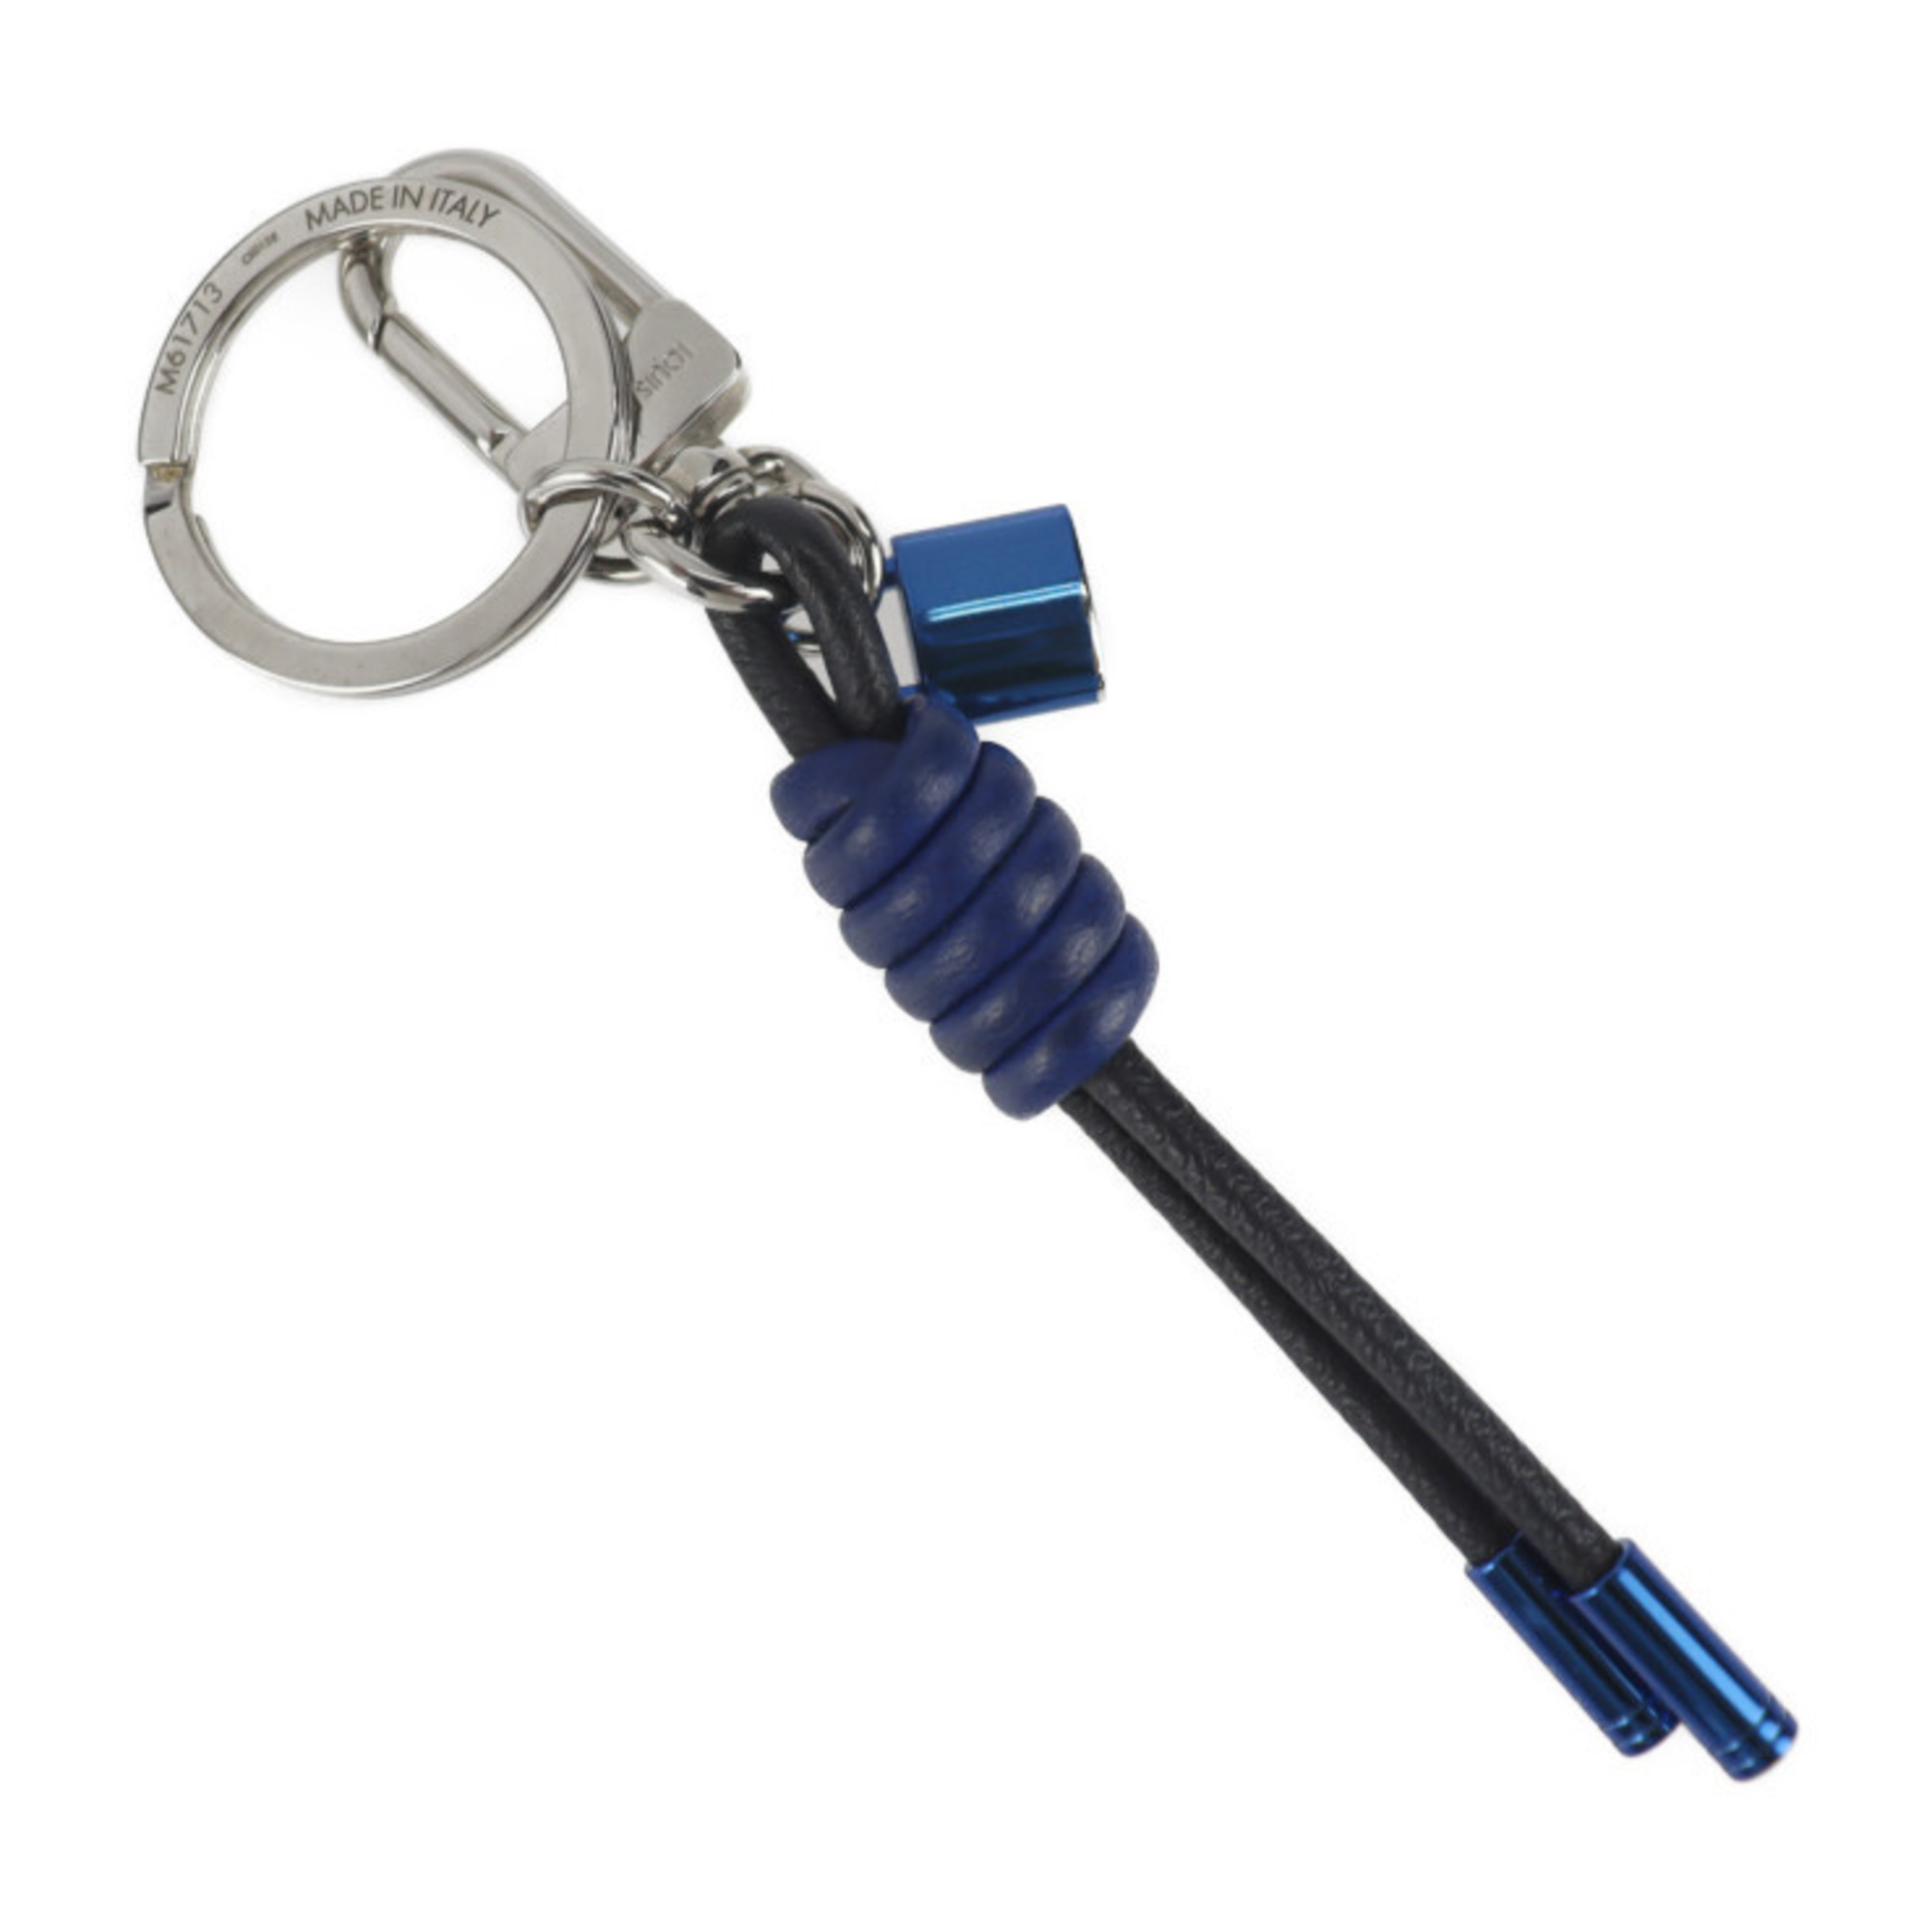 LOUIS VUITTON Louis Vuitton Portocle Knot Lock Keychain M61713 Metal Leather Silver Blue Black Key Ring